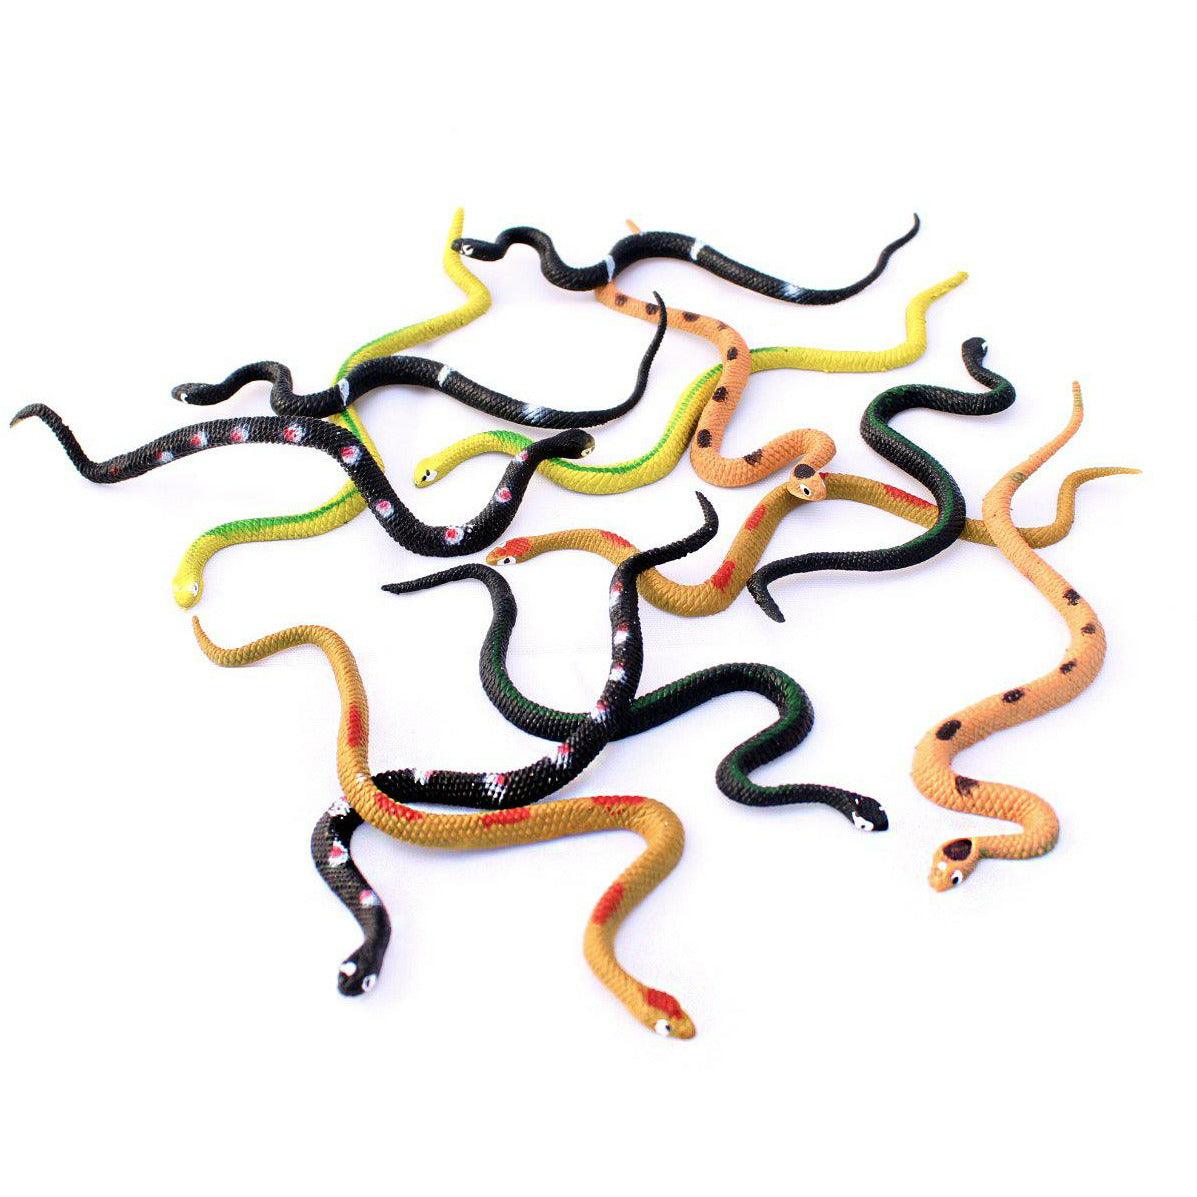 plastic snakes